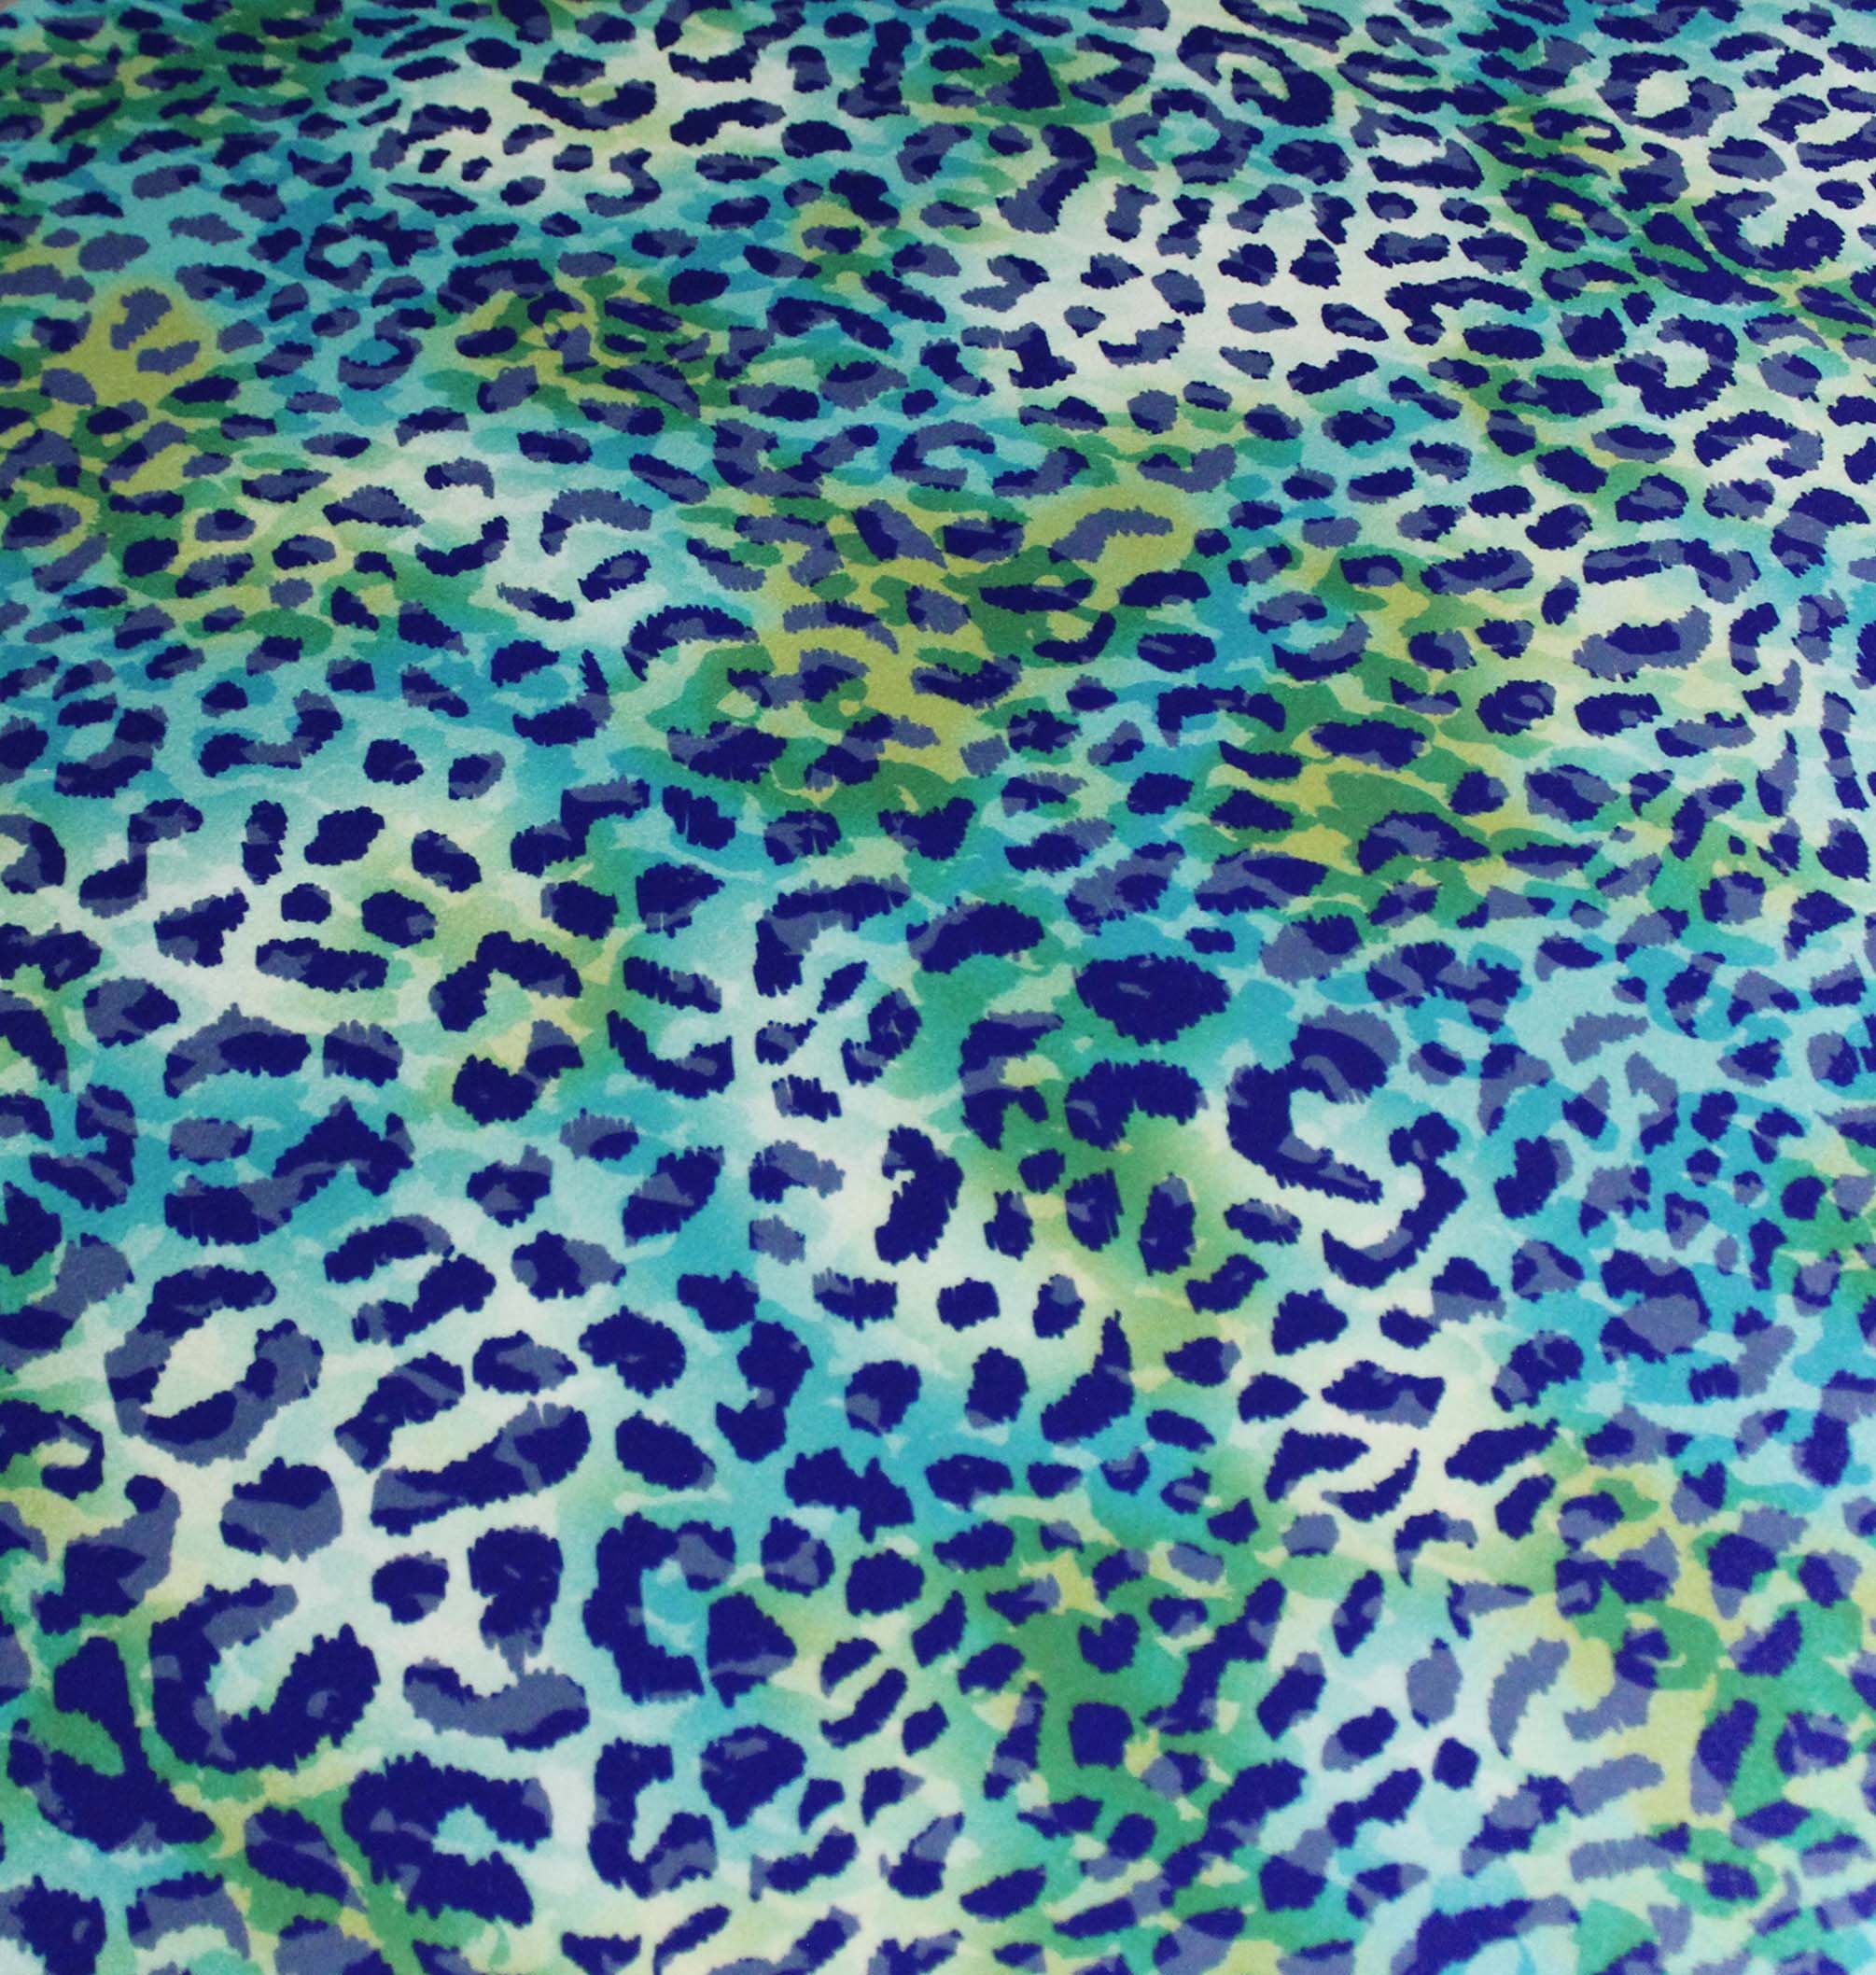 Velvet Leopard Skin Printed Home Decor Fabric Iconic Animal | Etsy